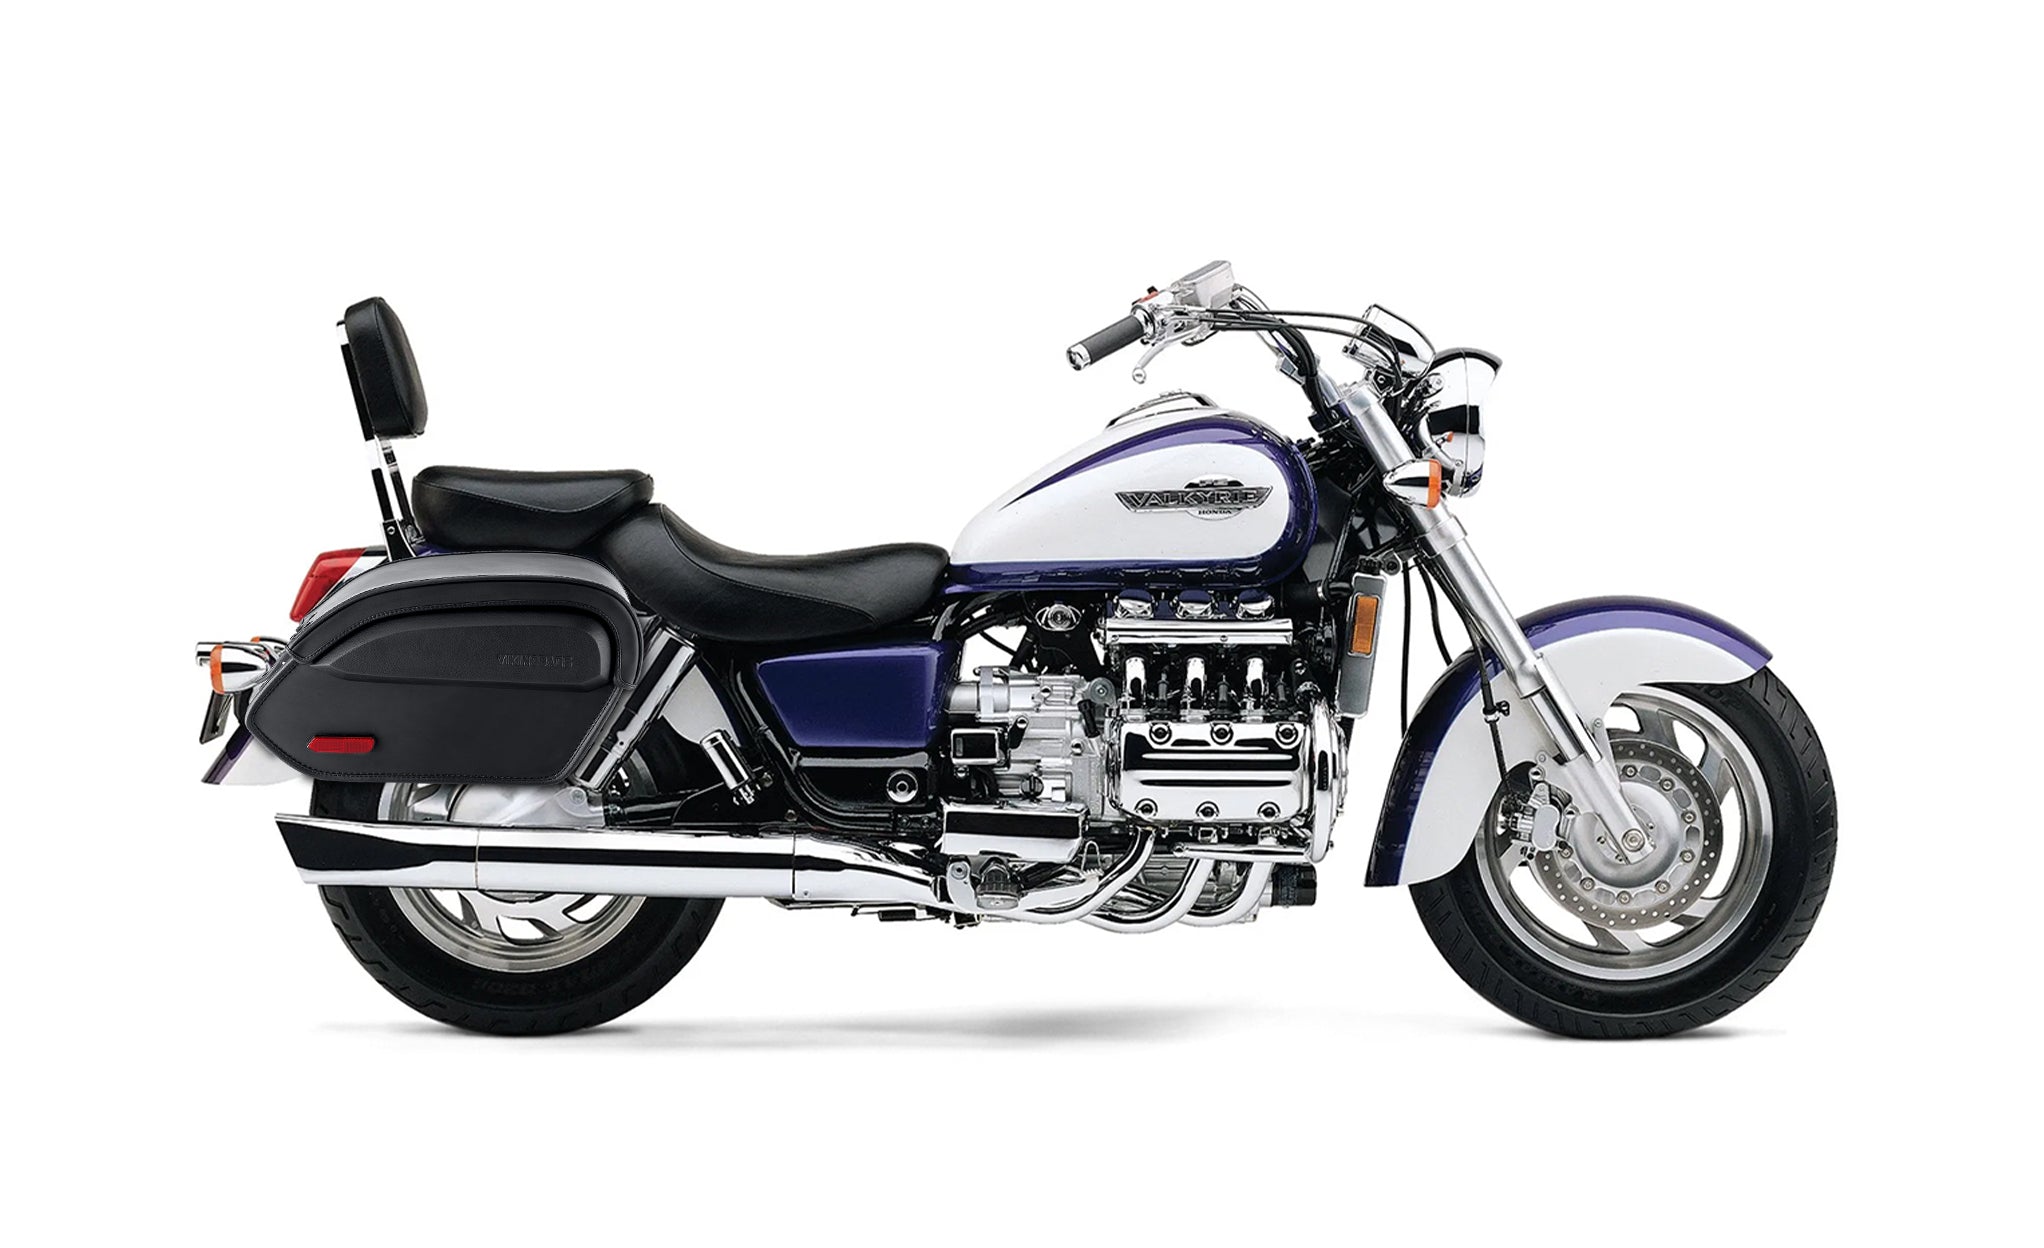 Viking Aviator Large Honda 1500 Valkyrie Interstate Leather Motorcycle Saddlebags on Bike Photo @expand